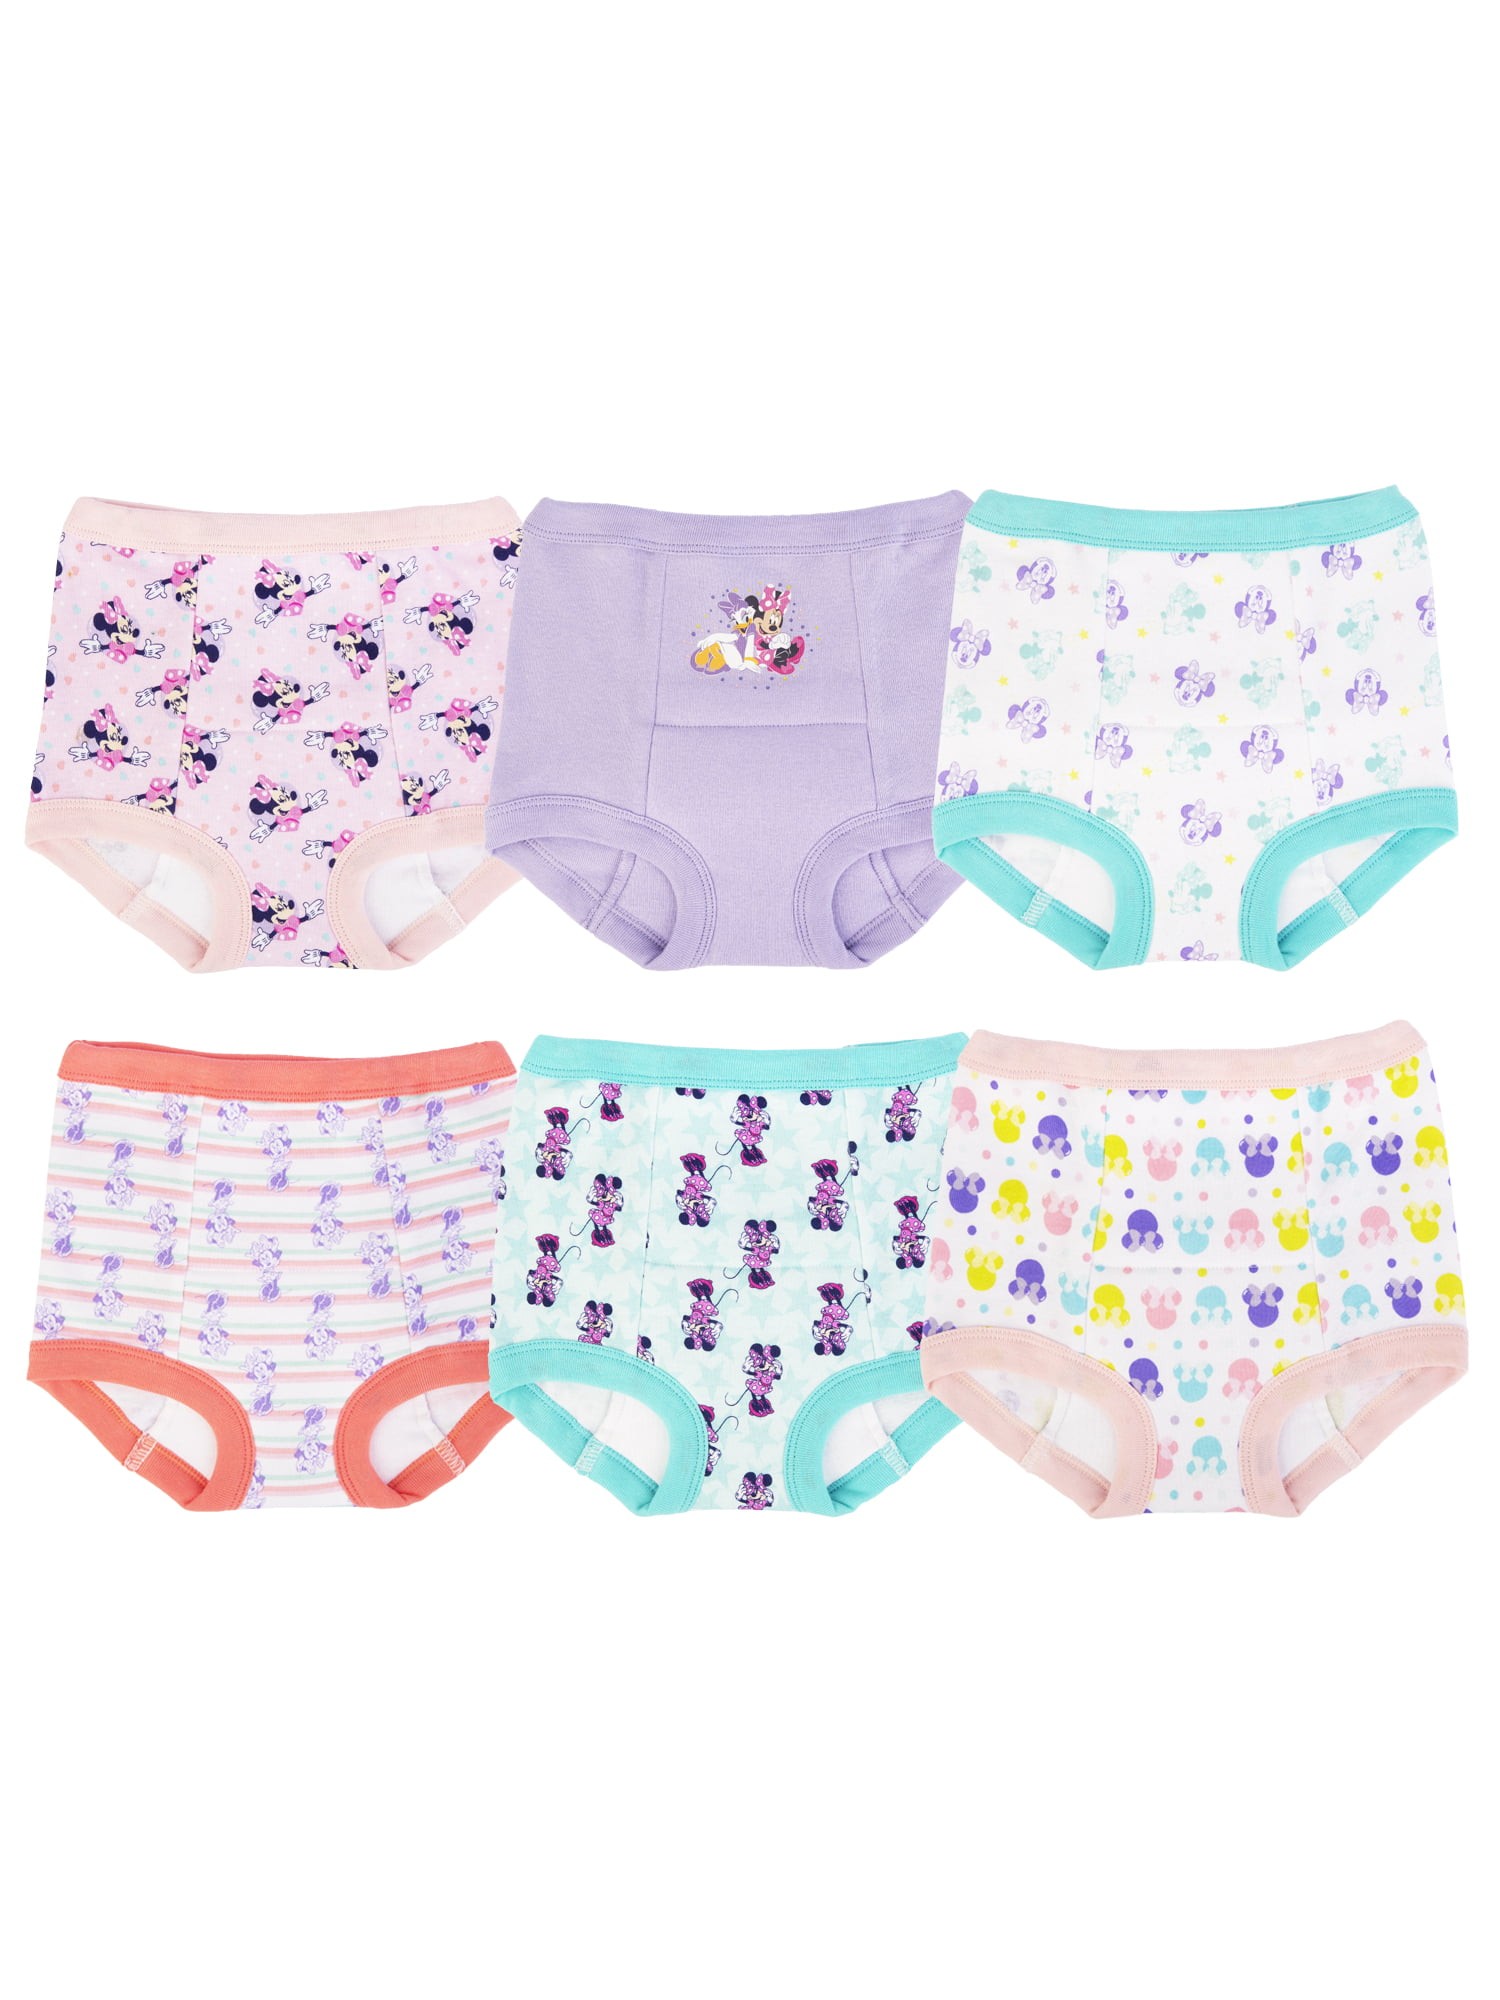 Disney Princess Toddler Girl Training Underwear, 12-Pack, Sizes 2T-5T 